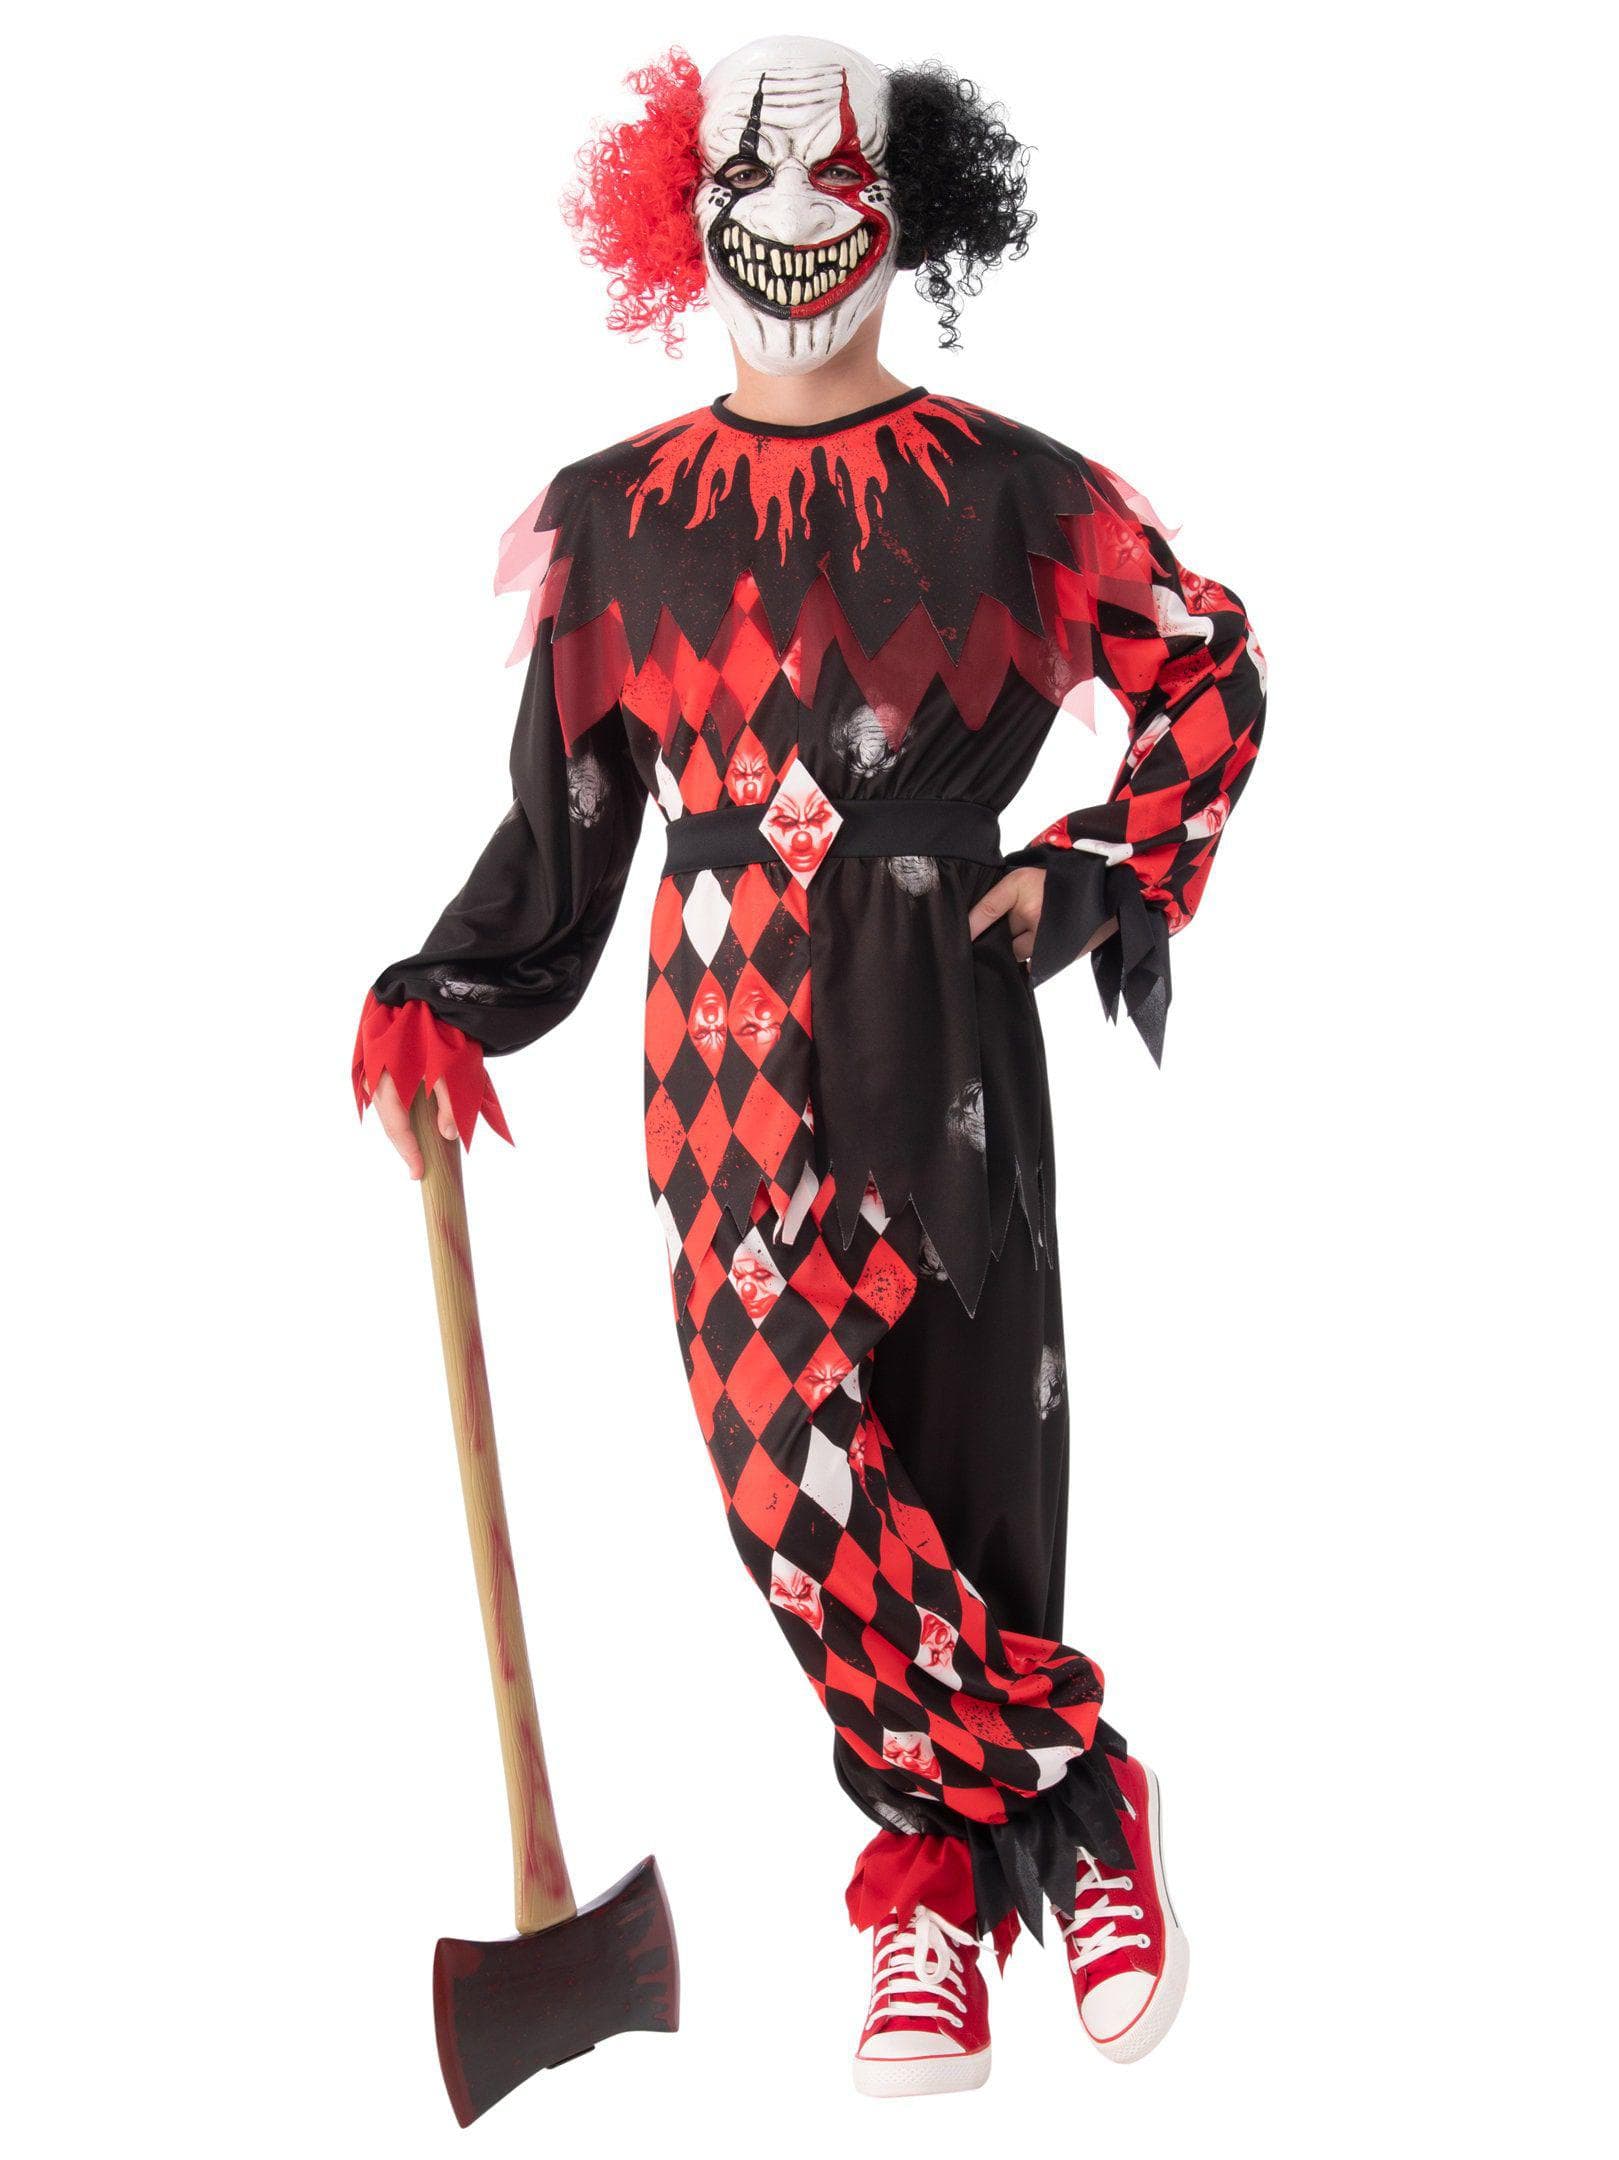 Kids Scary Clown Costume - costumes.com